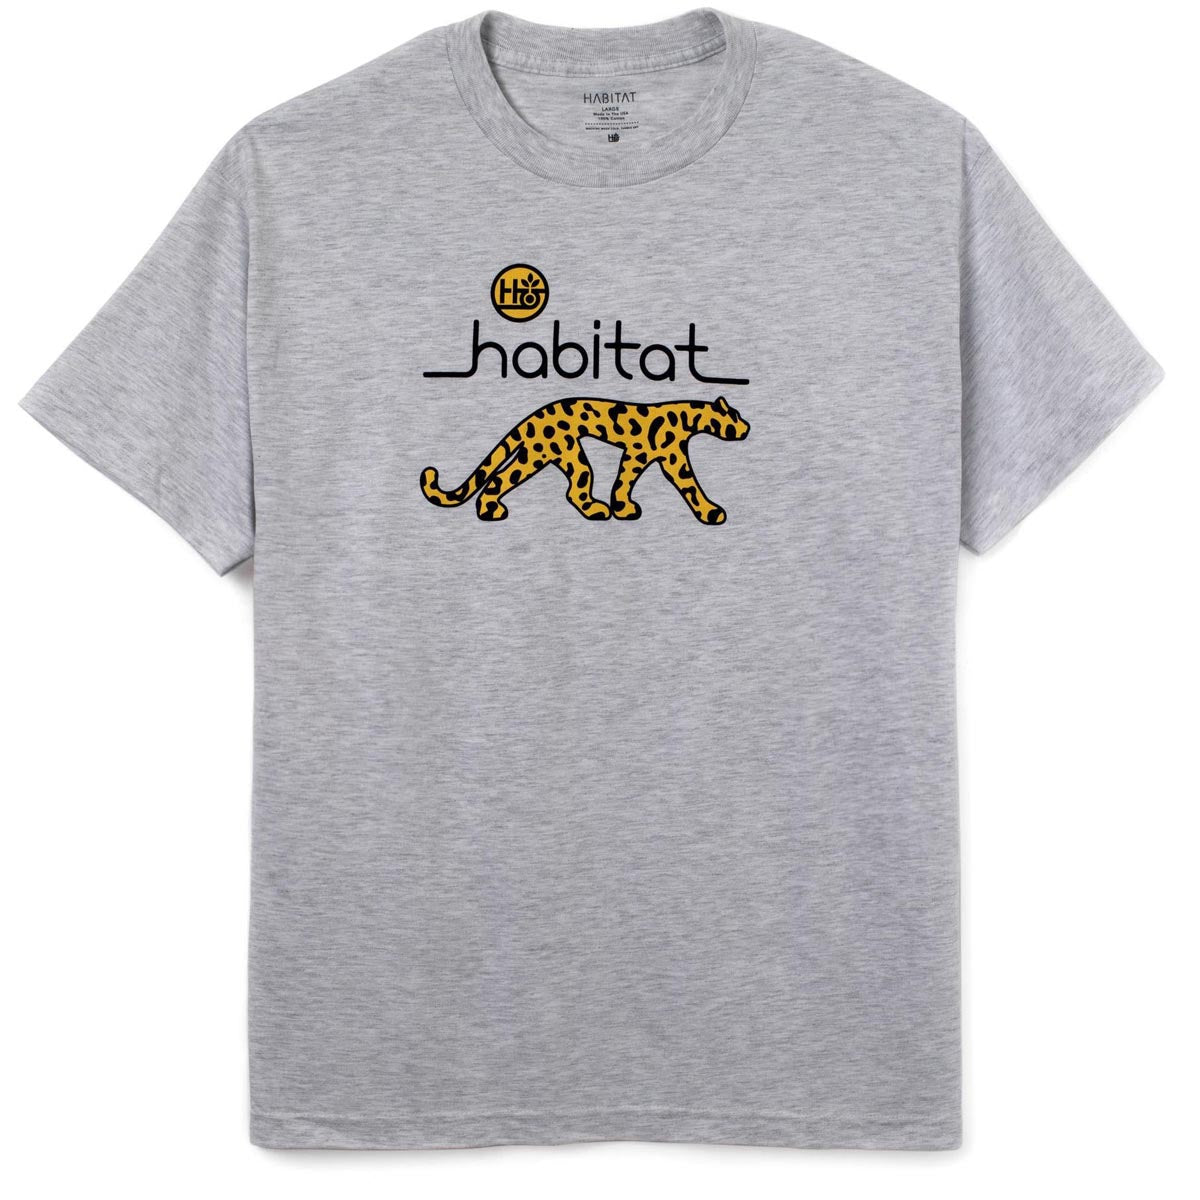 Habitat Panthera T-Shirt - Ash Heather image 1